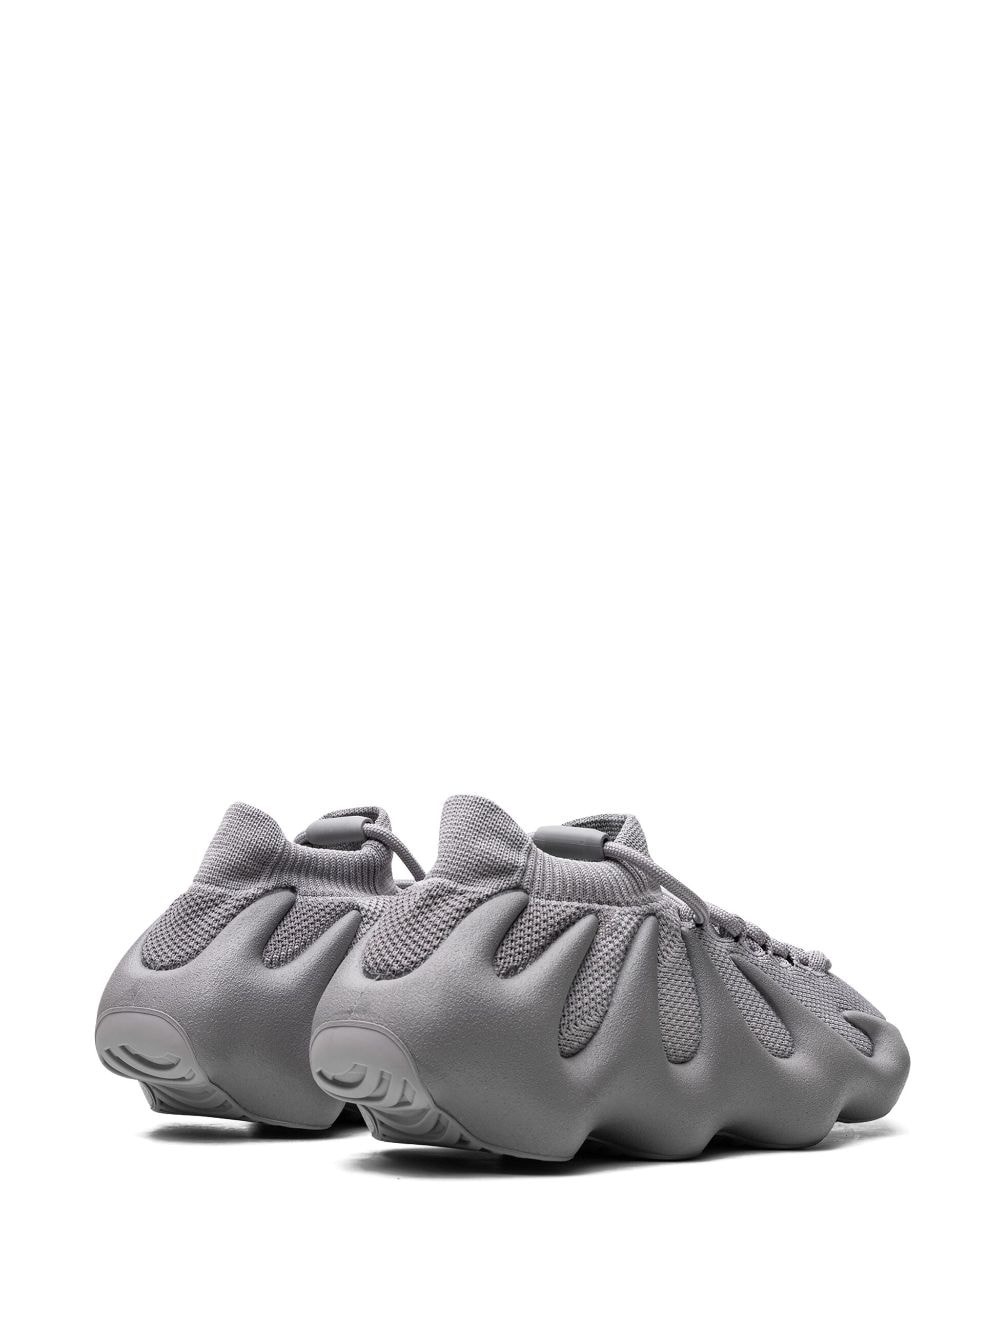 YEEZY 450 "Stone Grey" sneakers - 3